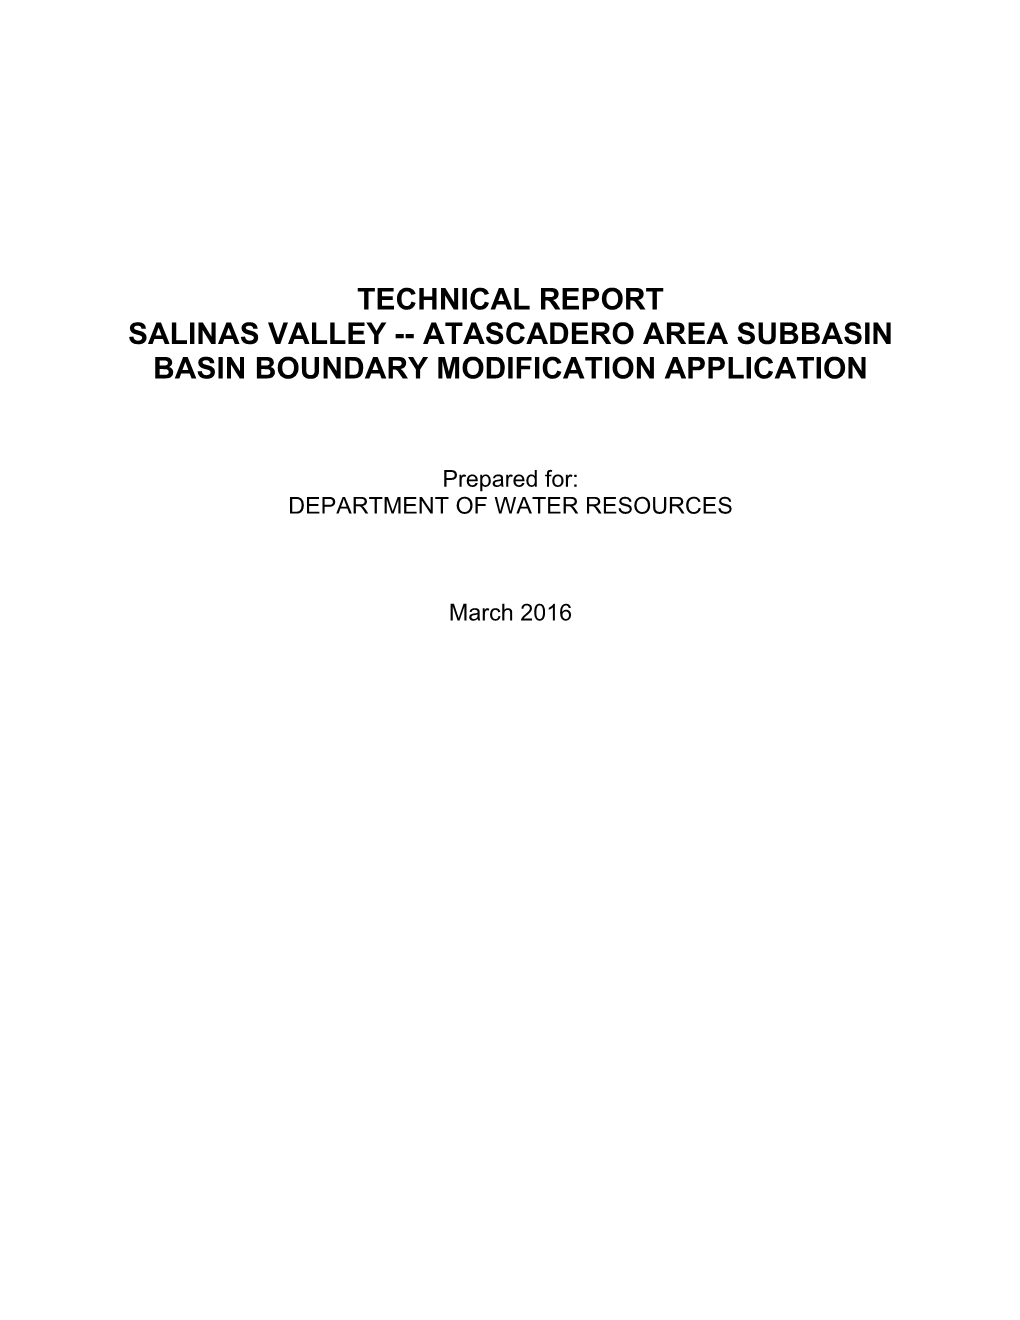 Atascadero Area Subbasin Basin Boundary Modification Application